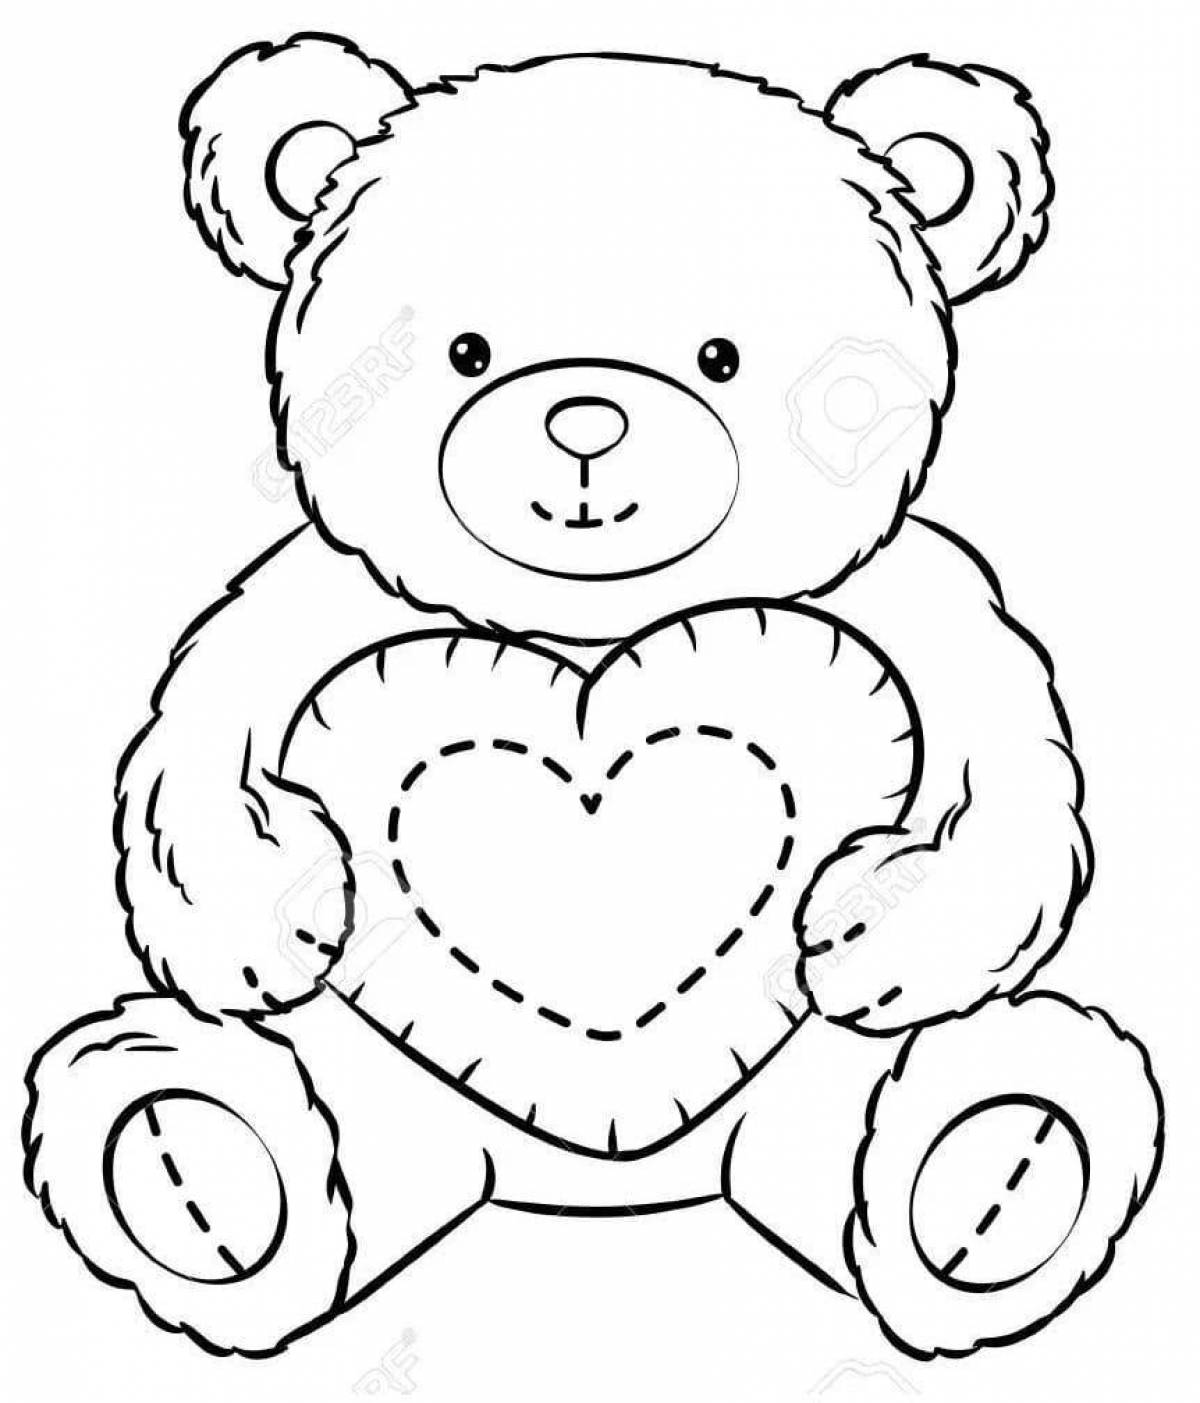 Living teddy bear in baby pants coloring book